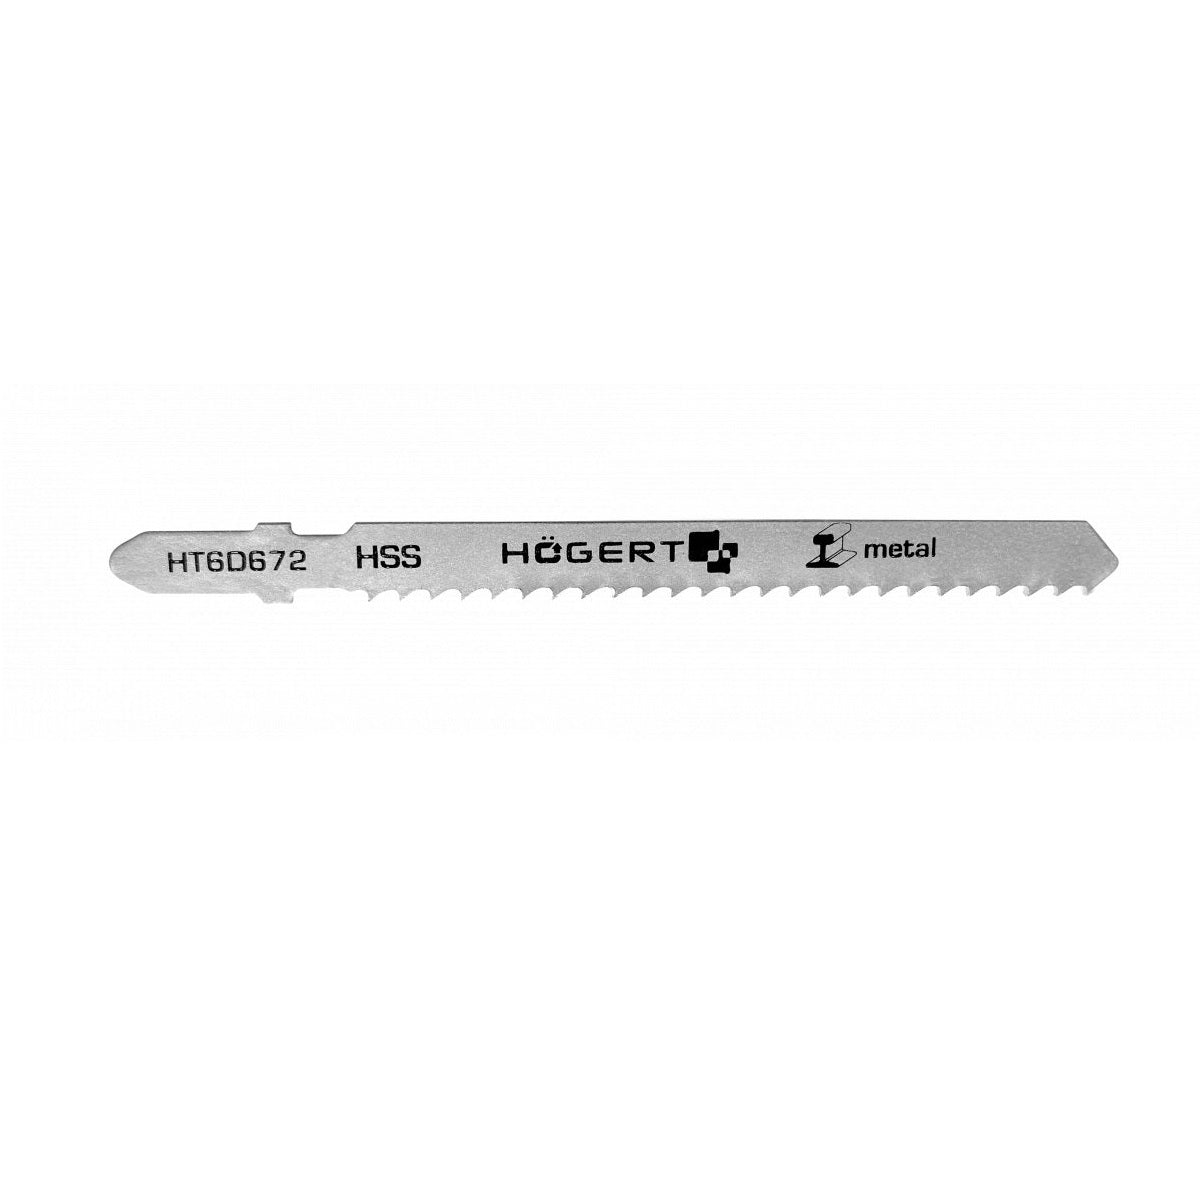 Hoegert Technik Jig Saw Blade for Metal HT6D672 (Pack of 5)